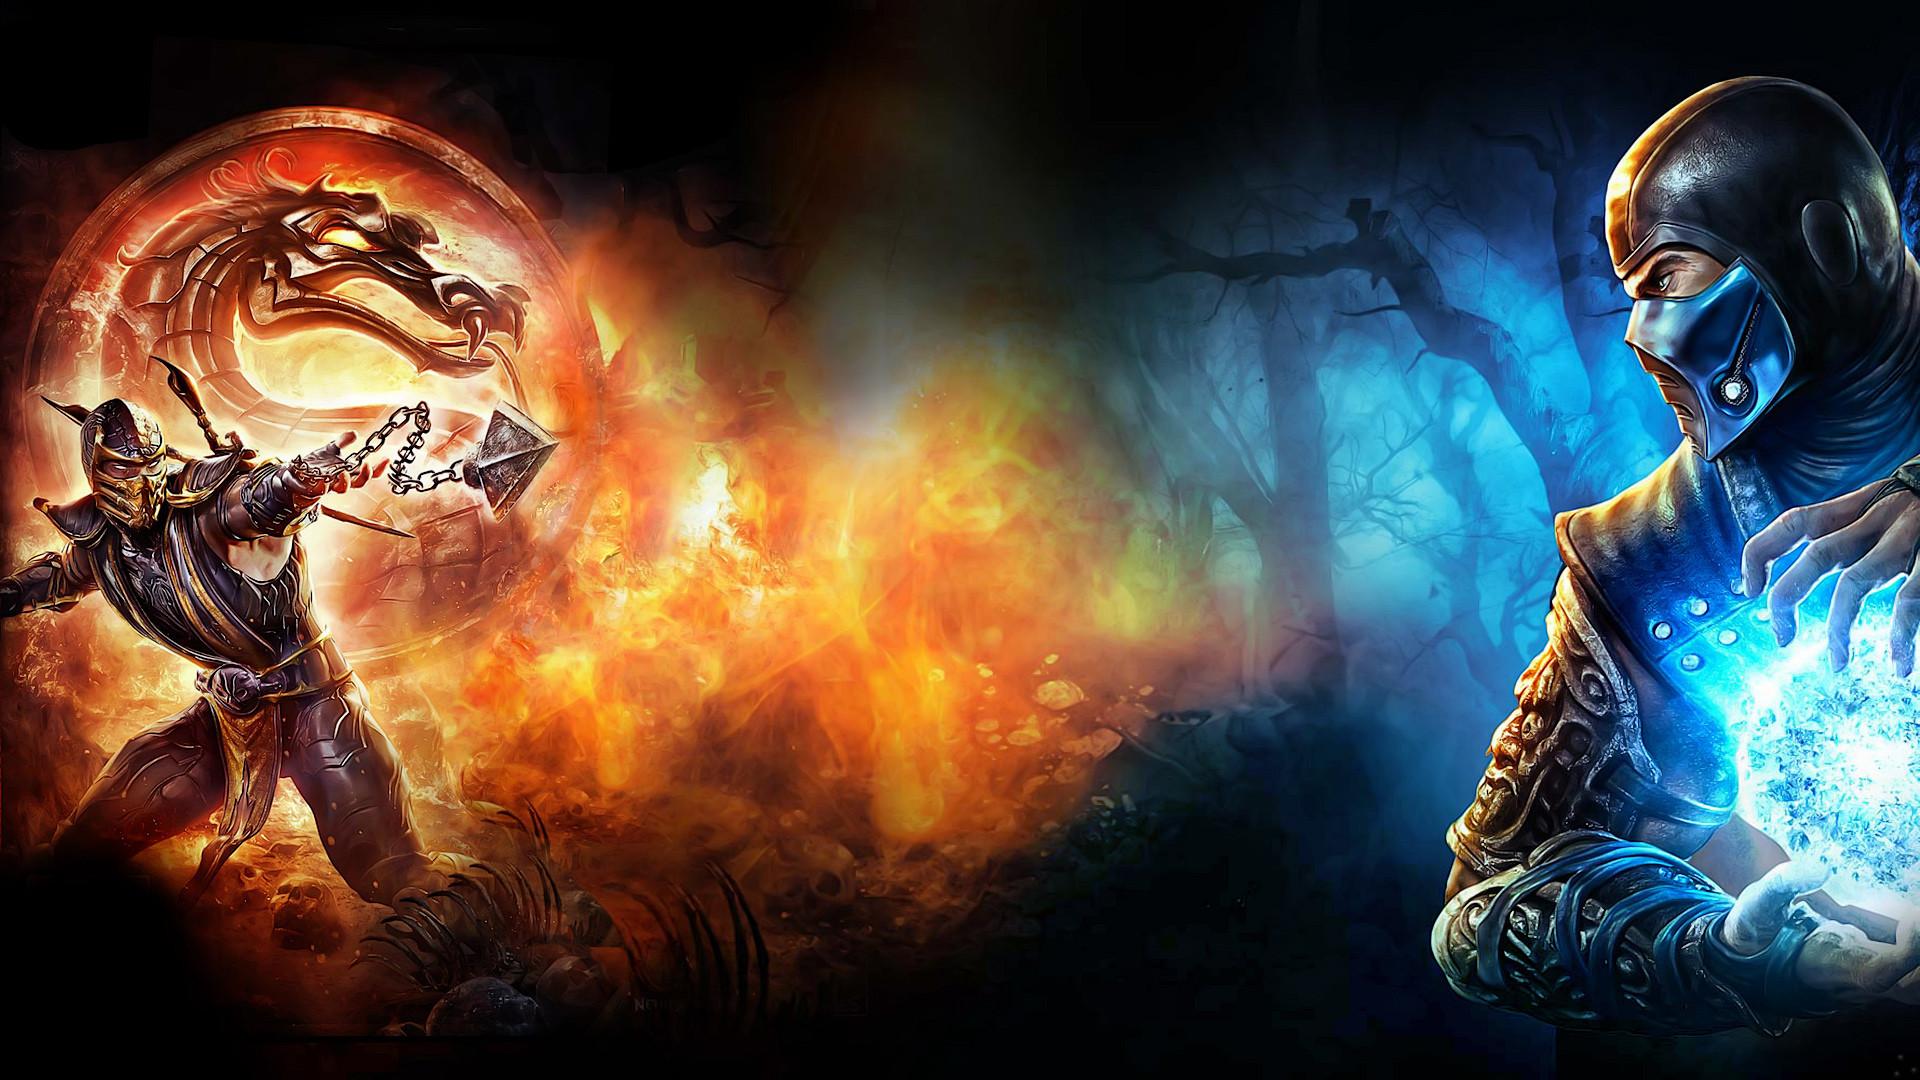 Mortal Kombat Wallpaper background picture